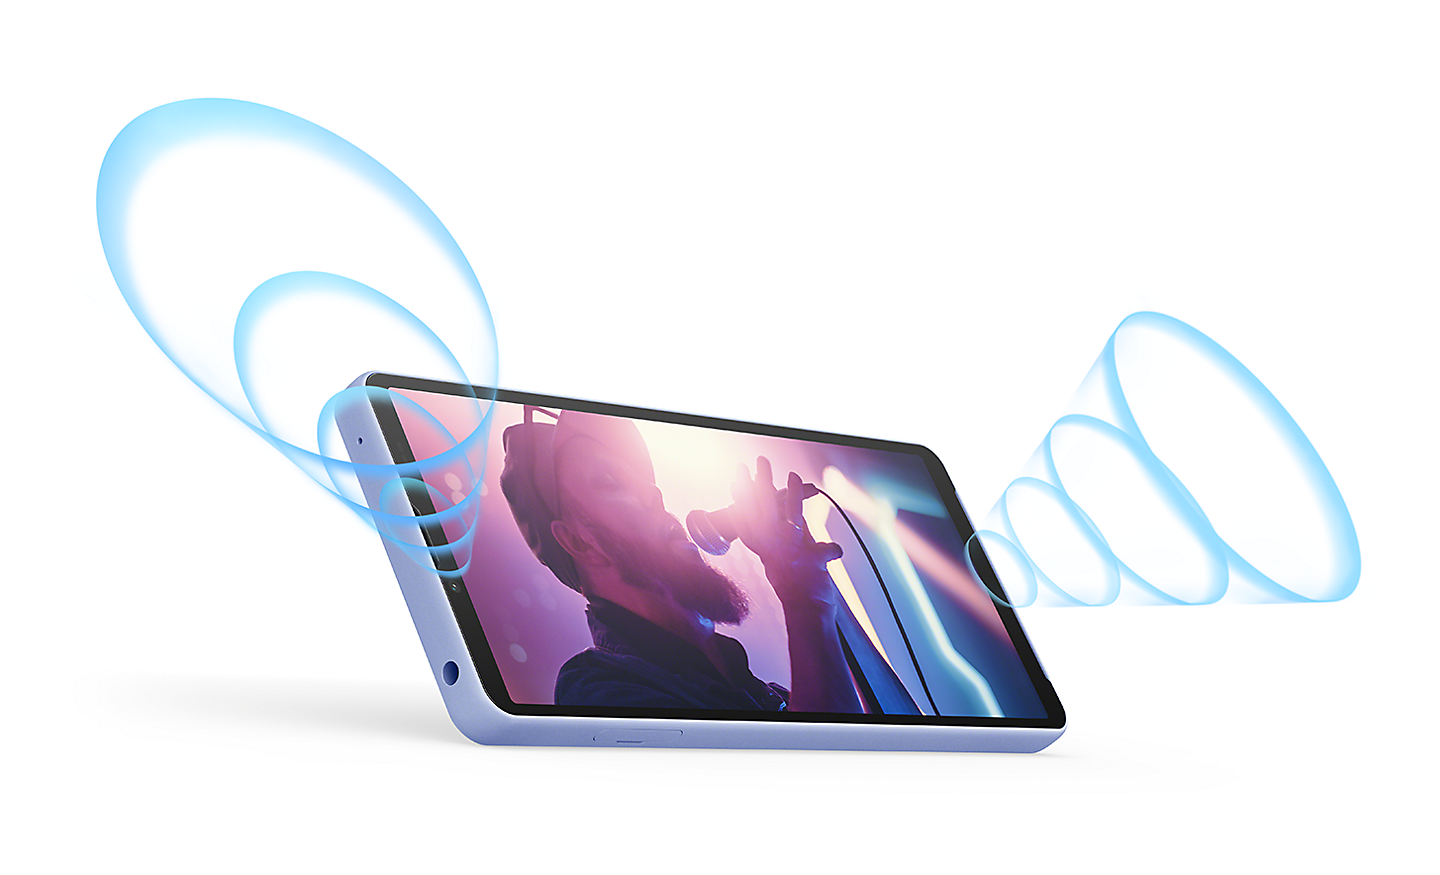 Xperia 10 V σε οριζόντια θέση, που δείχνει την εικόνα ενός τραγουδιστή. Απεικονίζονται μπλε ηχητικά κύματα που εκπέμπονται από τα μπροστινά στερεοφωνικά ηχεία.